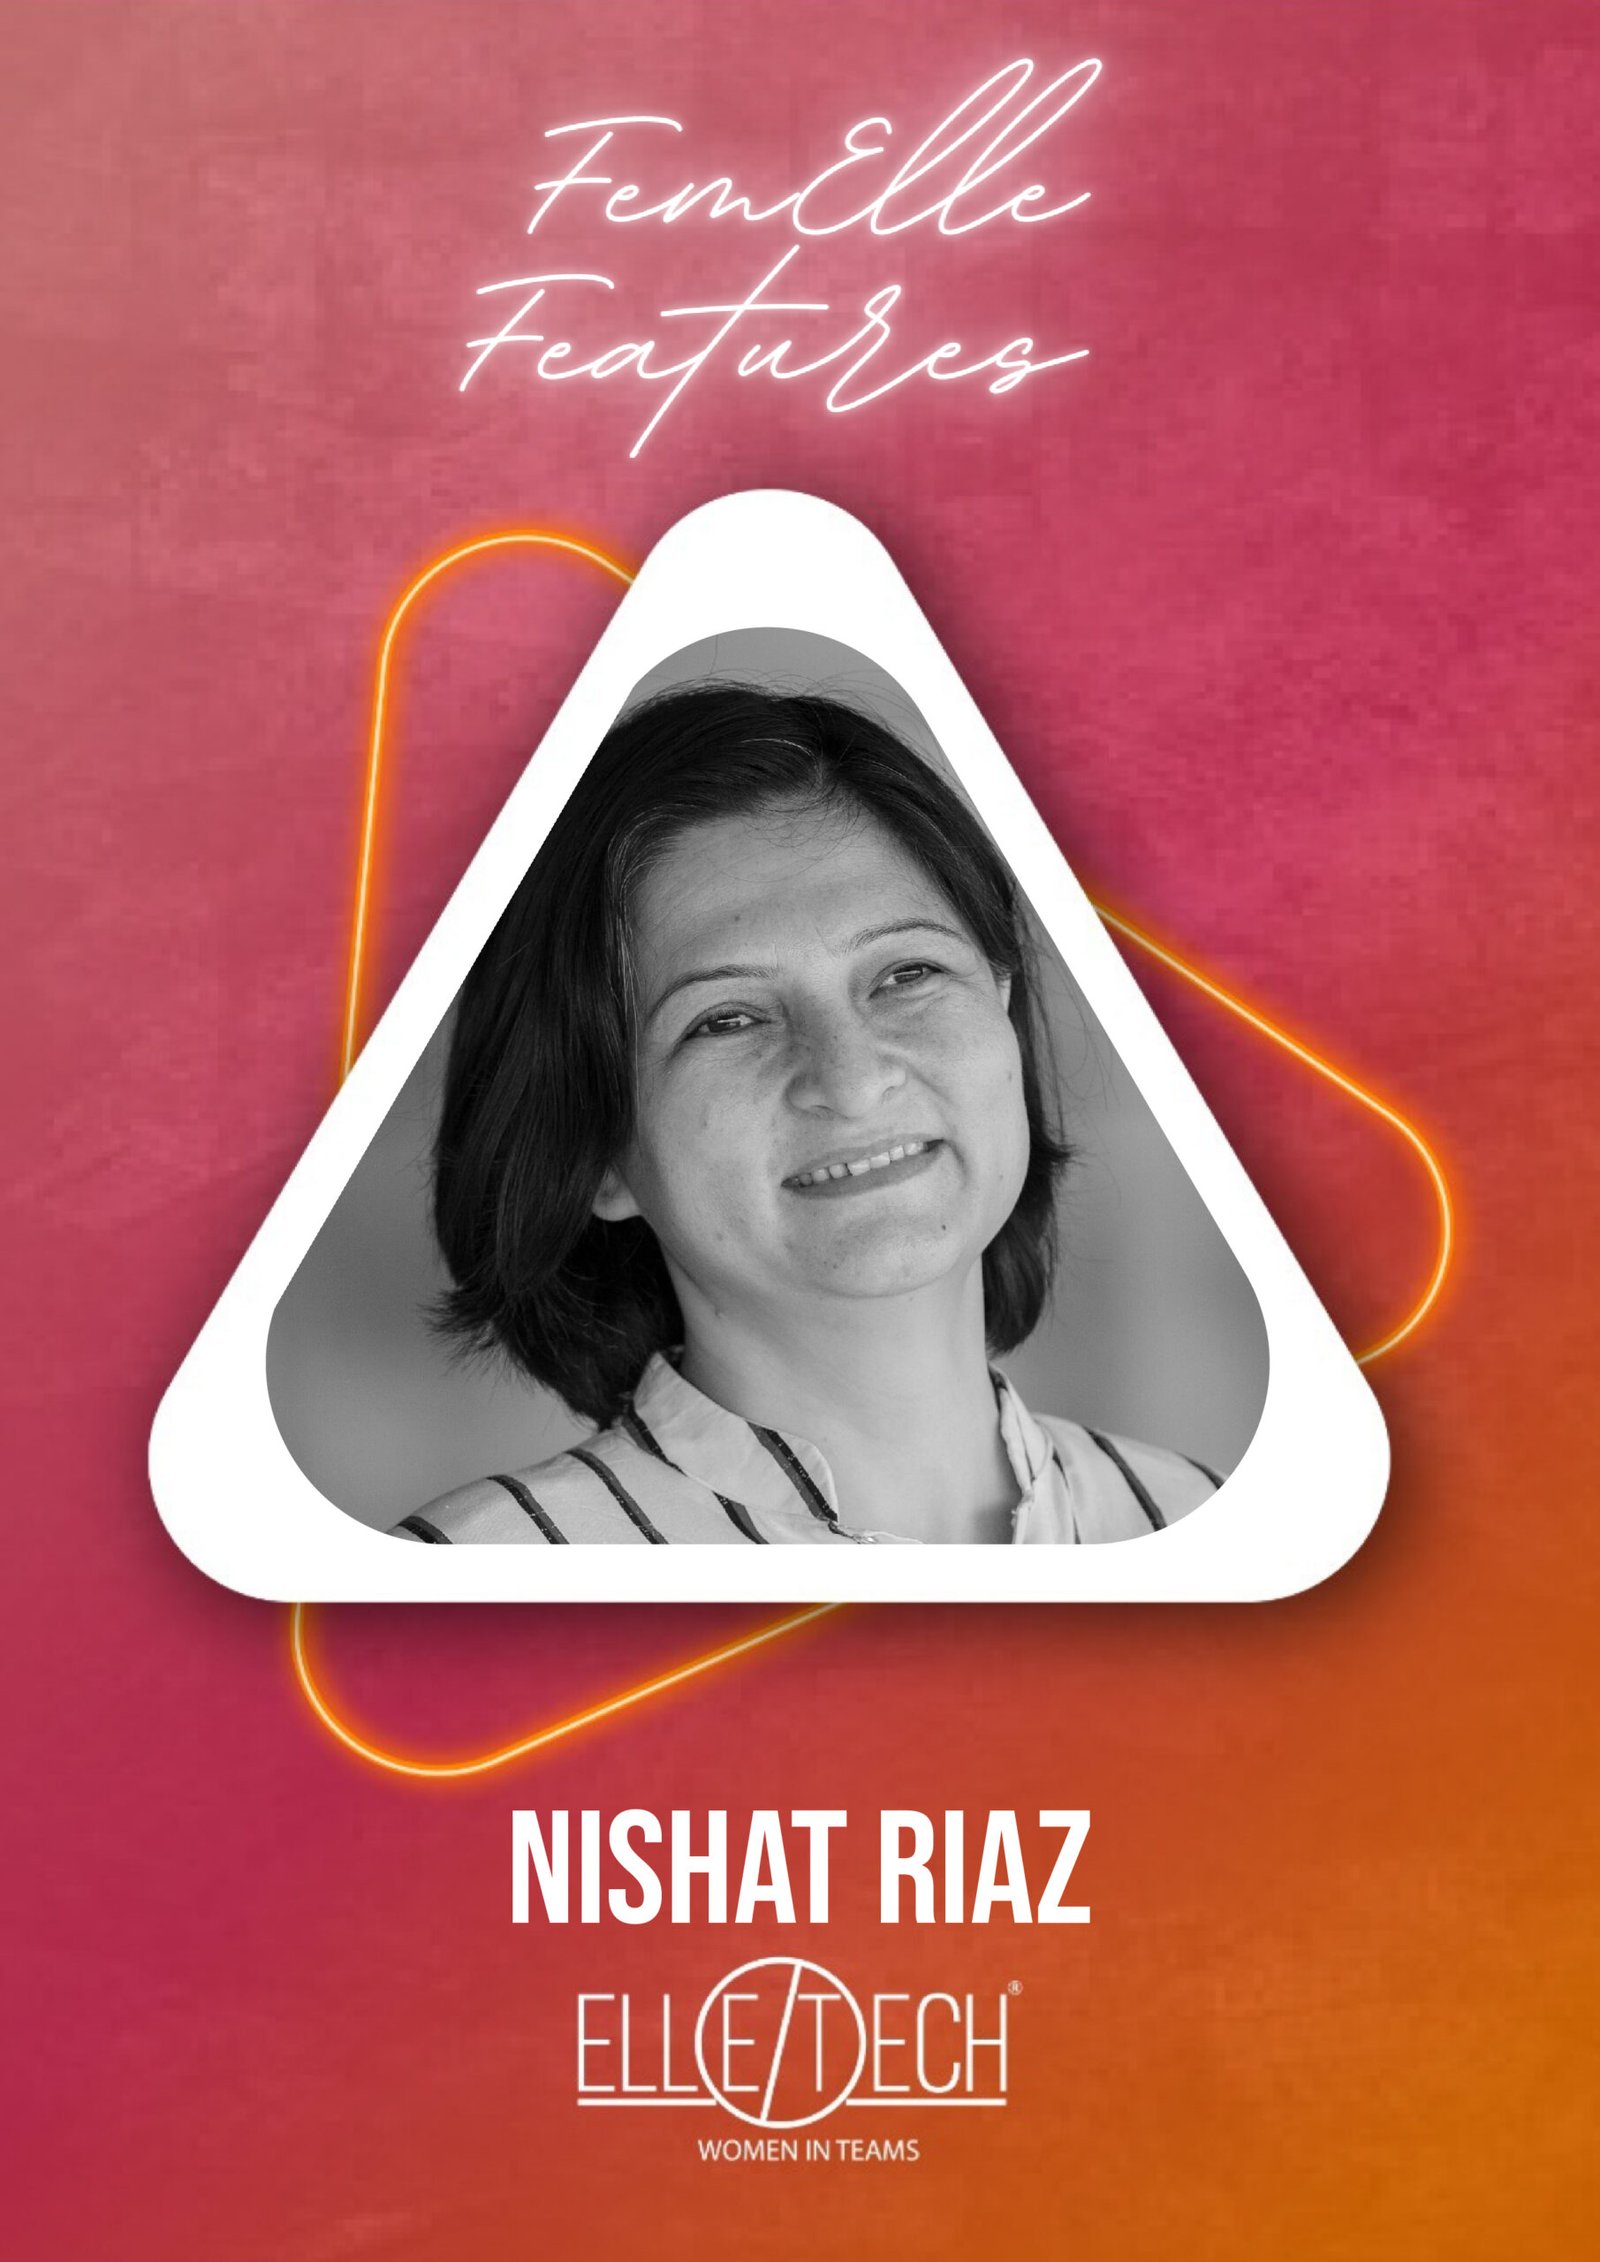 FemElle Feature: Nishat Riaz